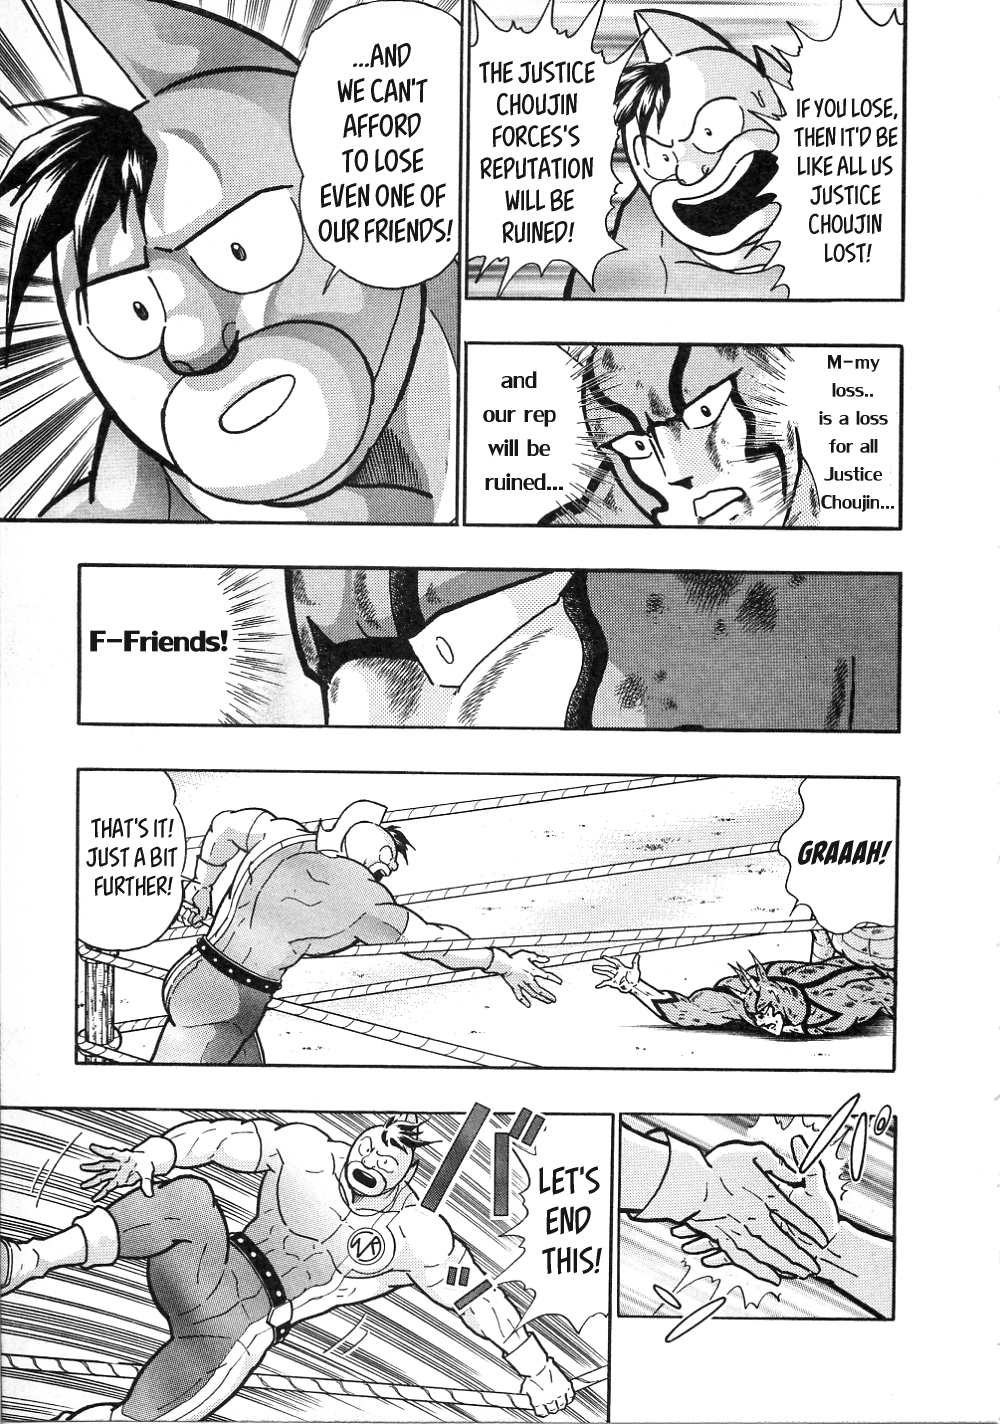 Kinnikuman II Sei: All Choujin Daishingeki Vol. 1 Ch. 6 Part With the Past! Slice the Fax!